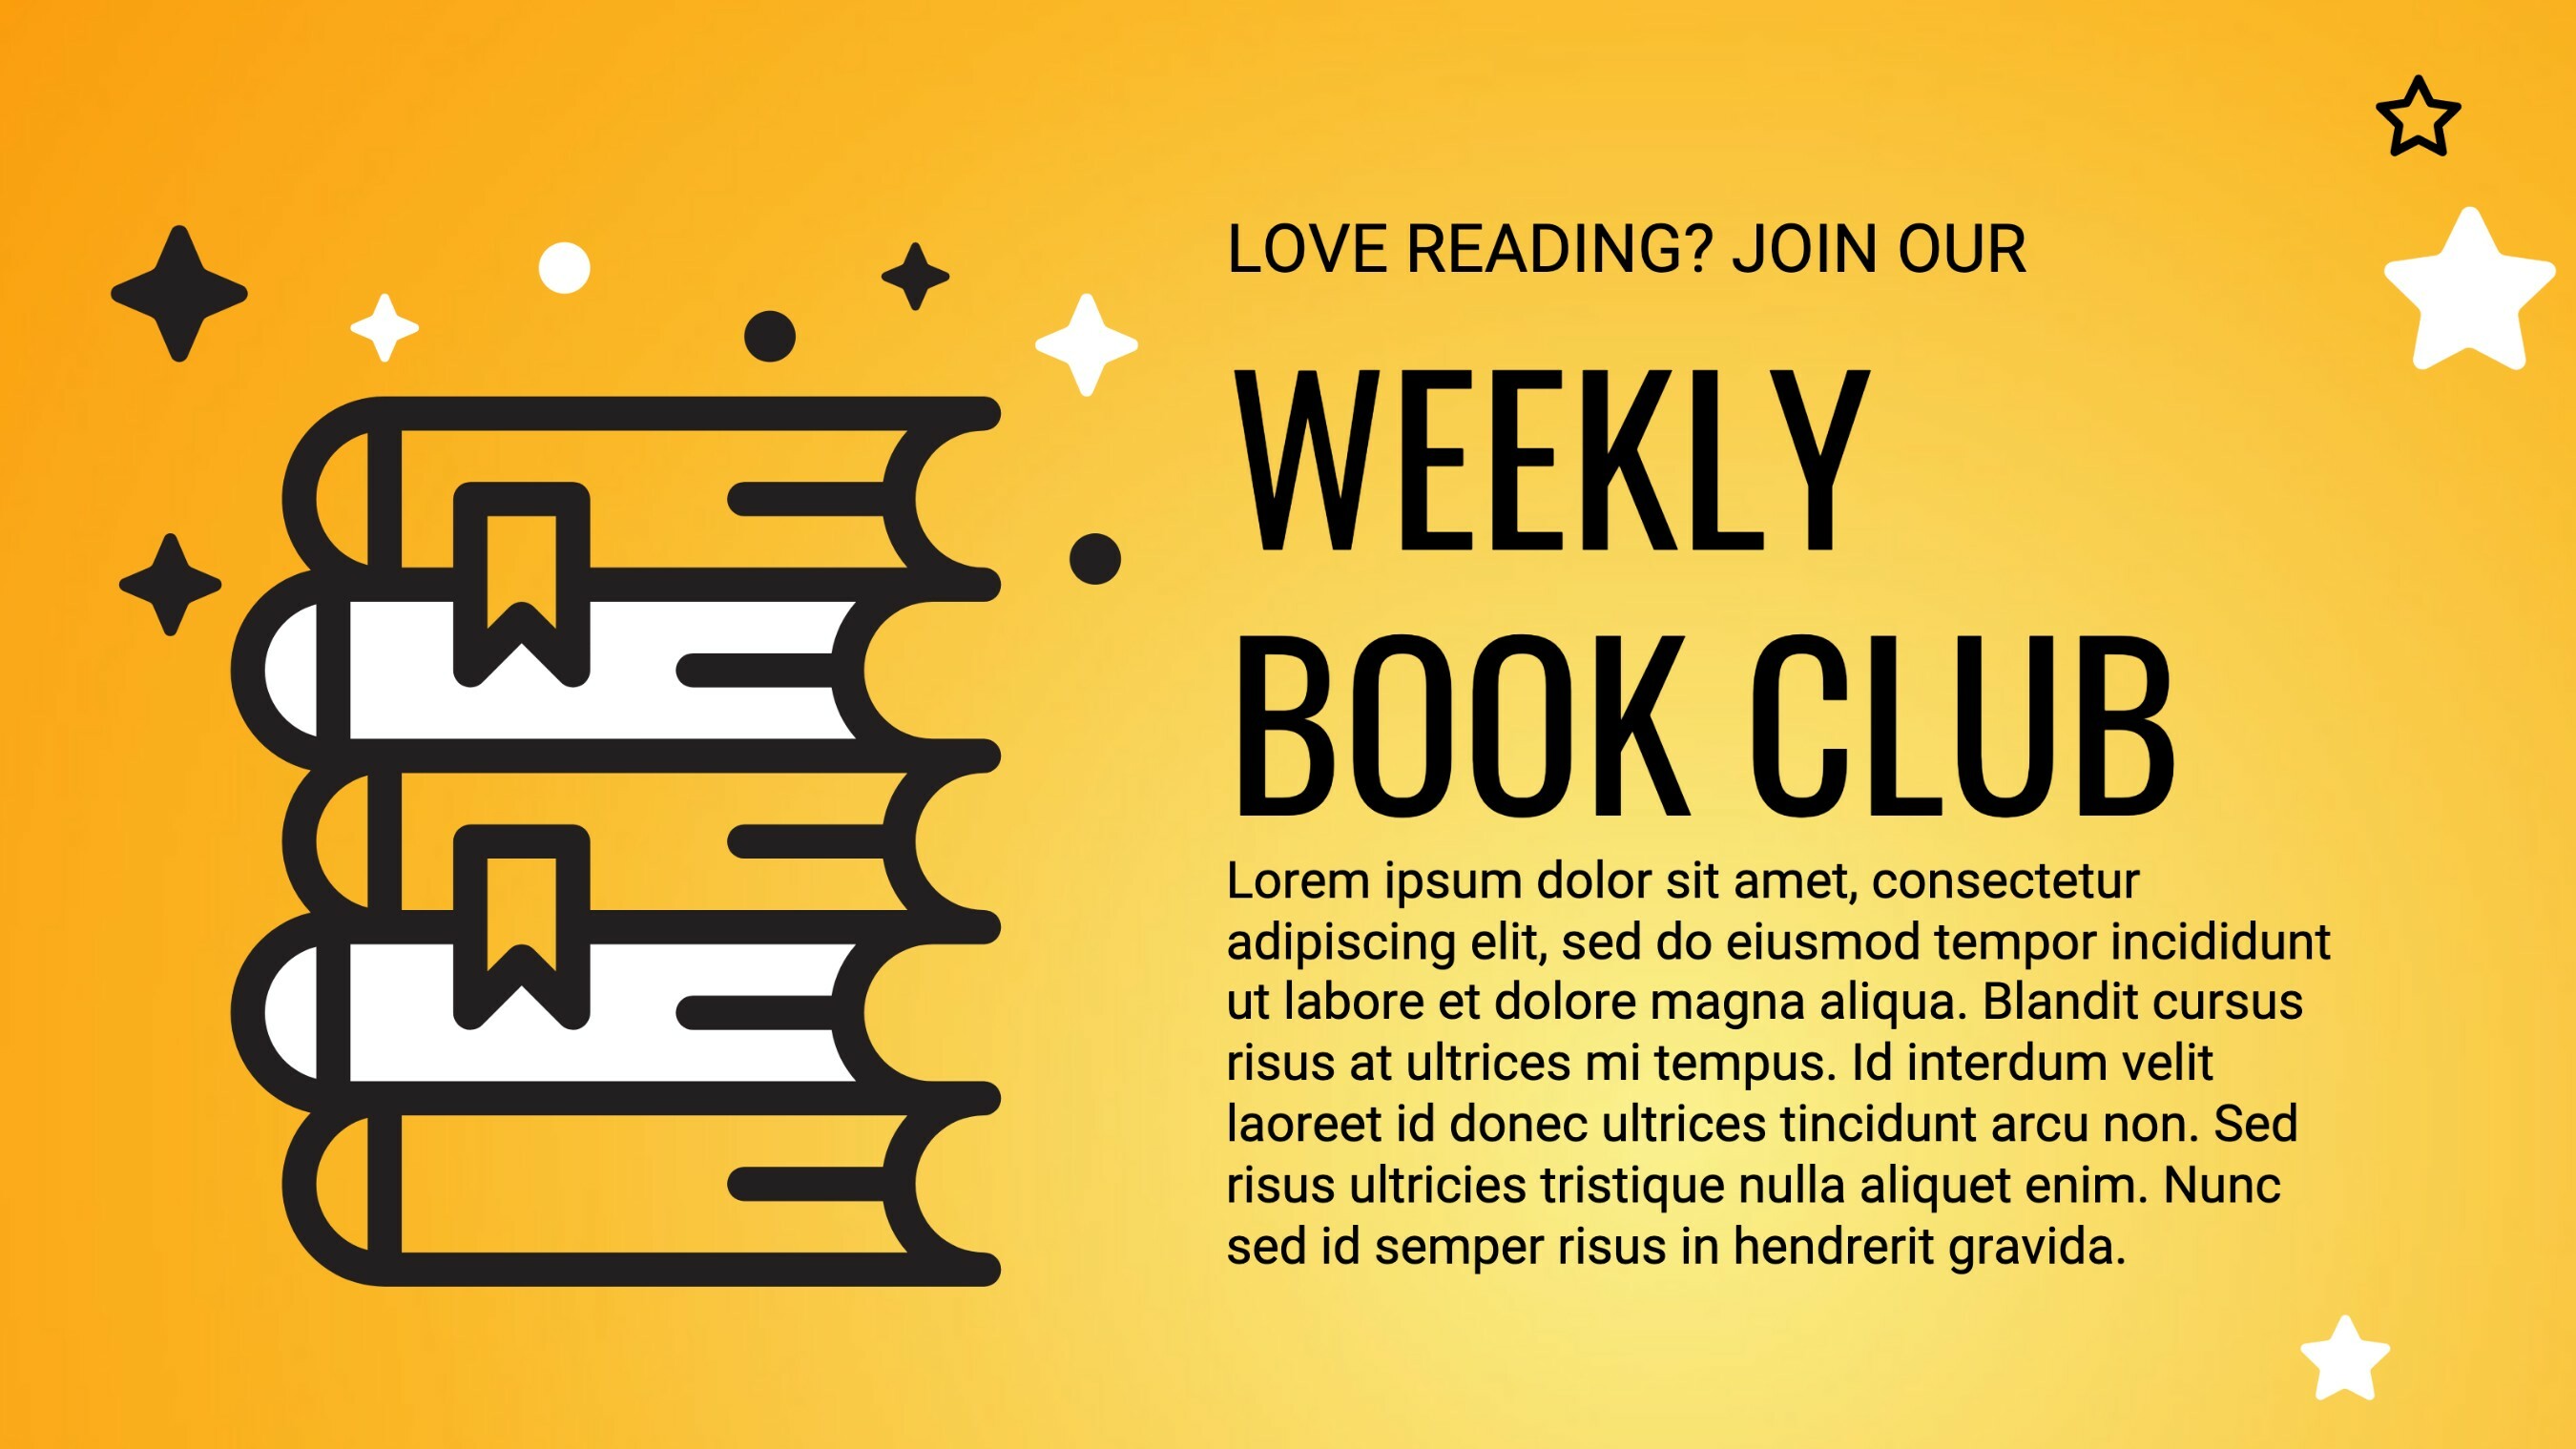 Book Club Promo template